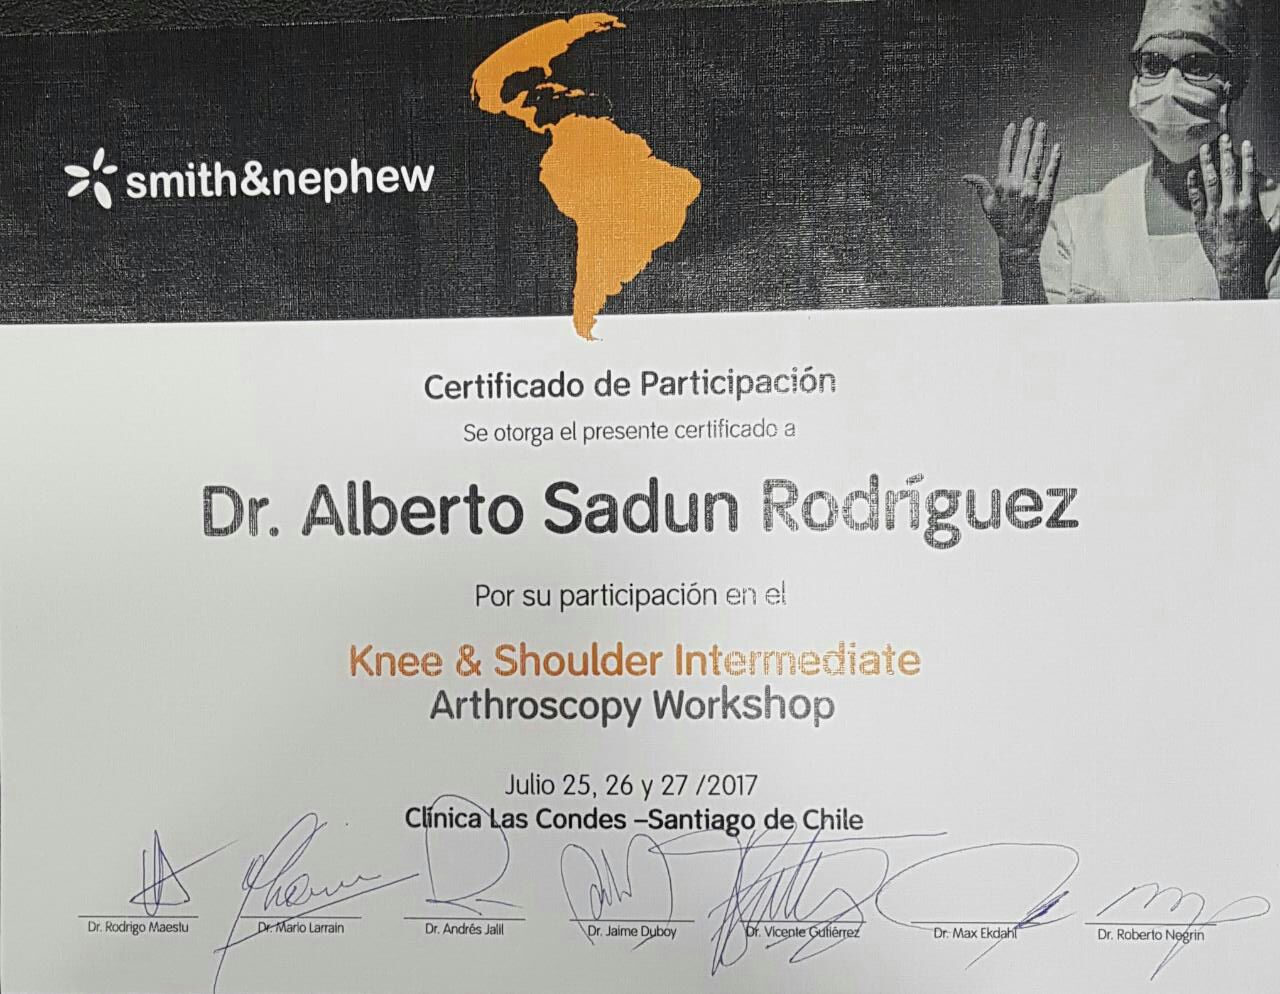 knee and Shoulder Intermediate Arthroscopy Workshop